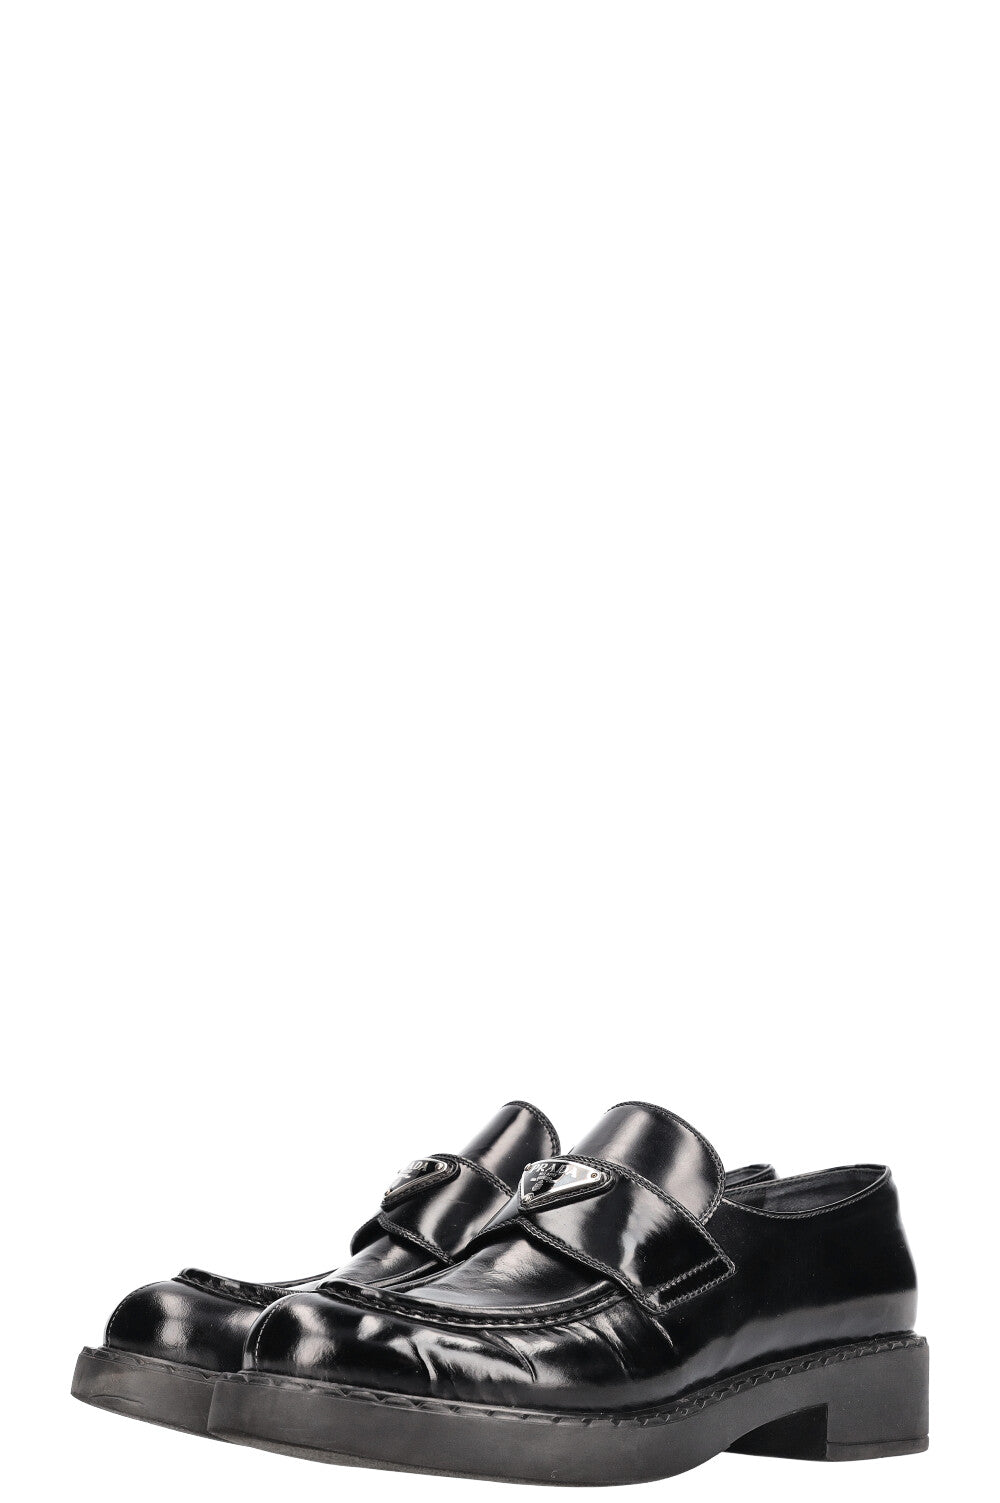 PRADA Logo Loafers Black